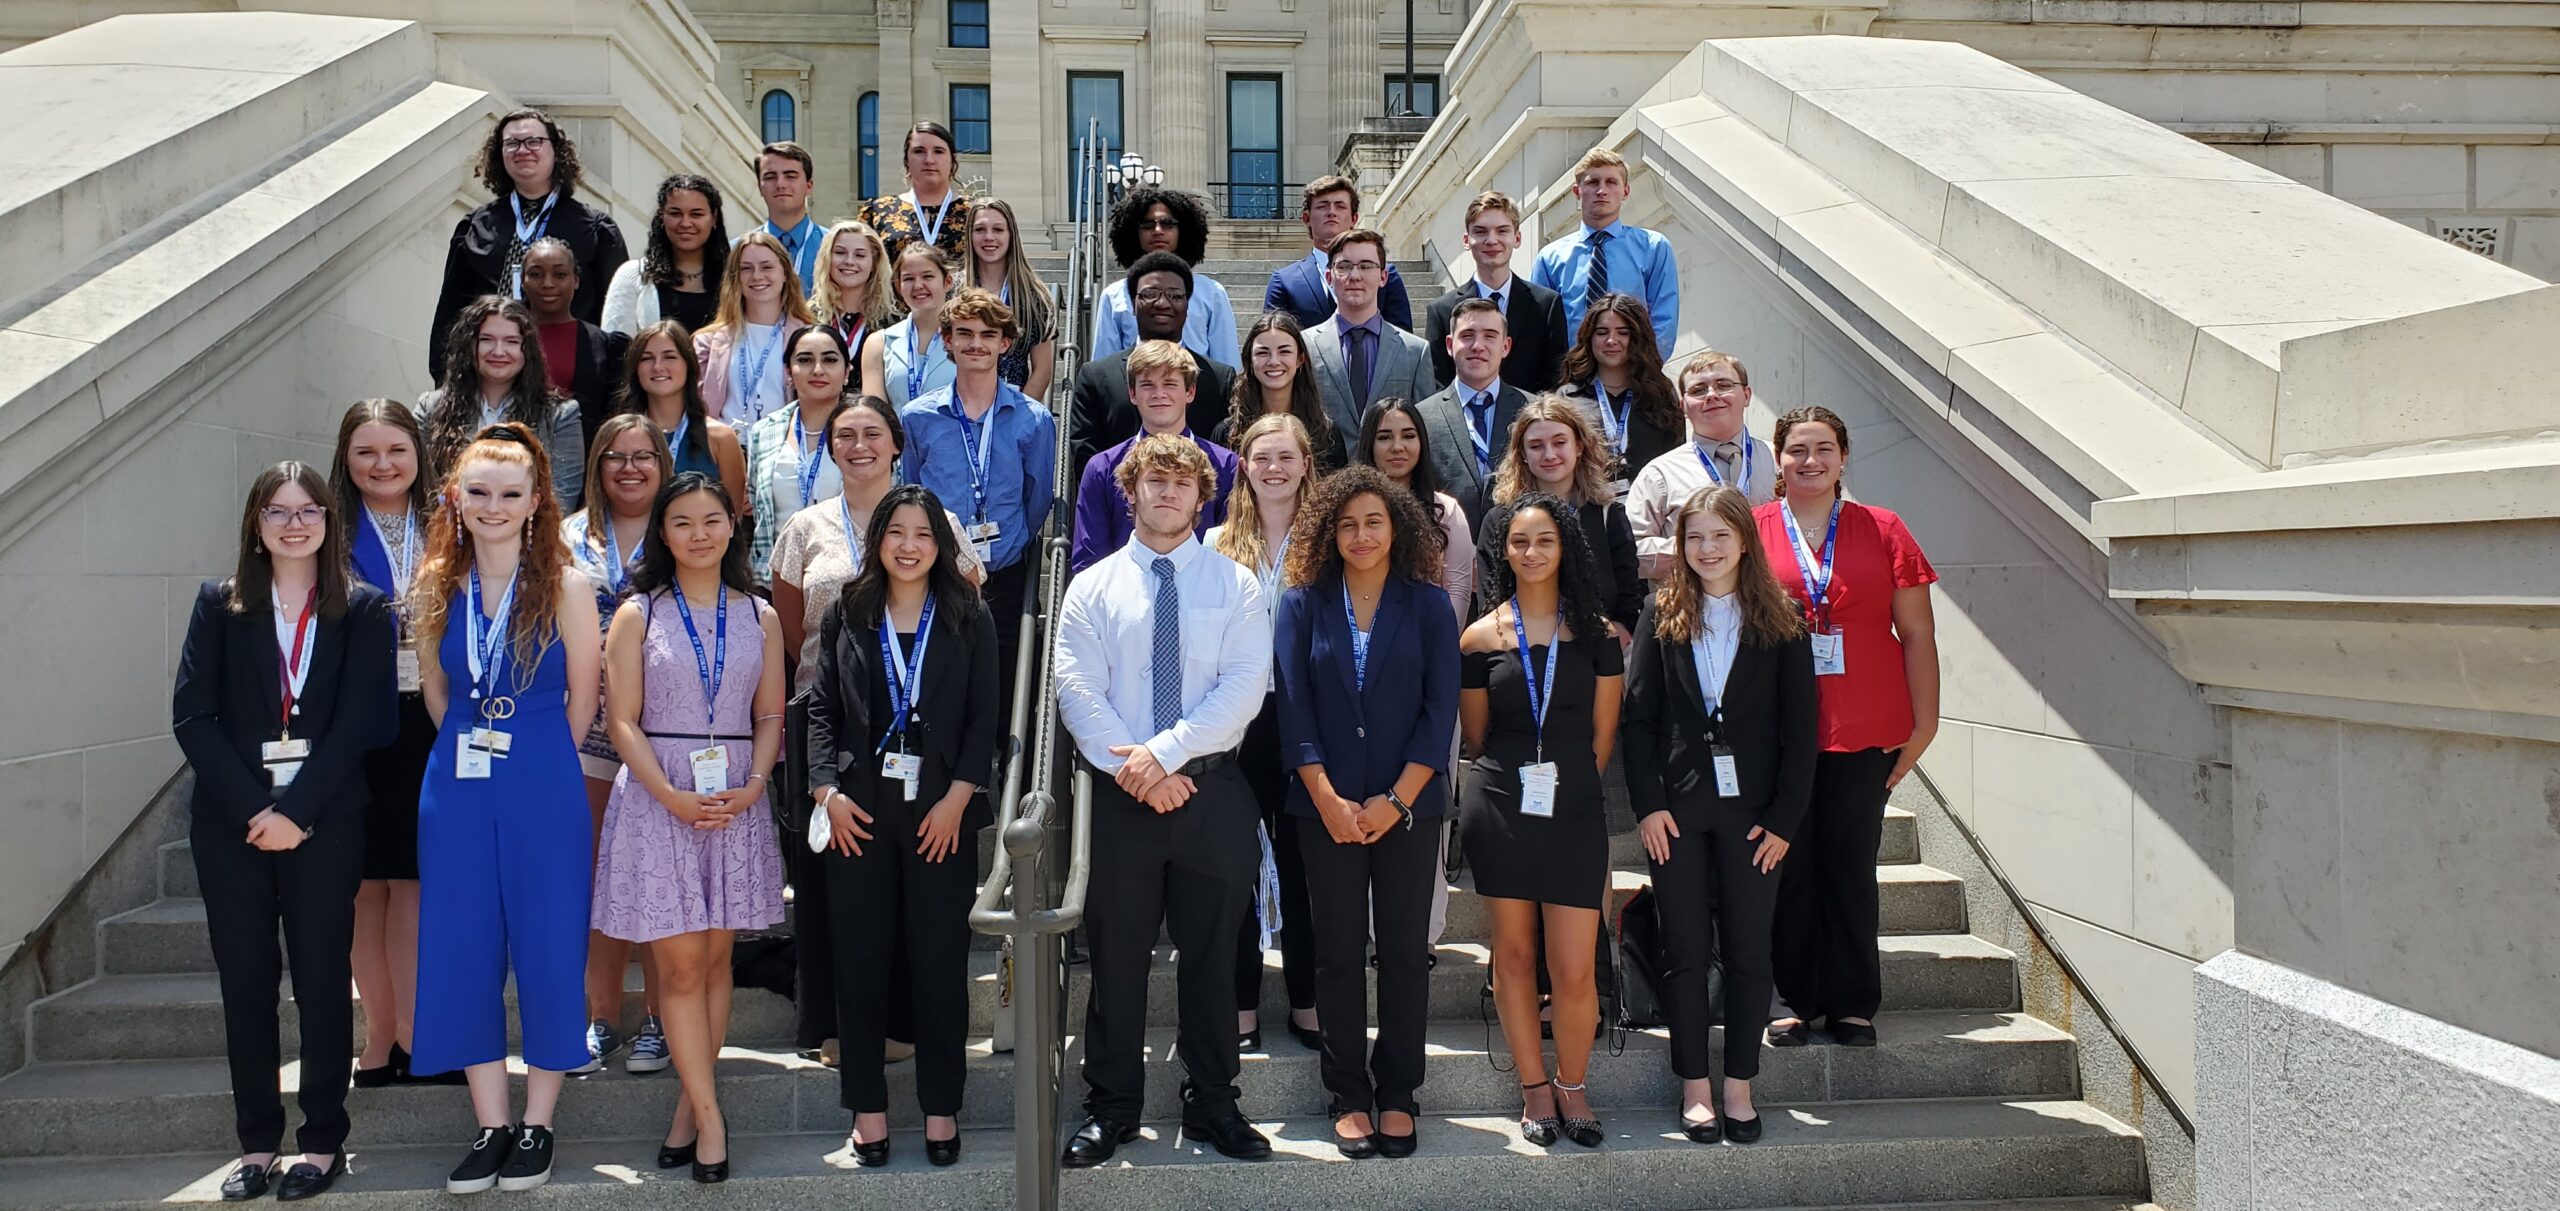 Students visit legislators and staff at the Capitol in Topeka